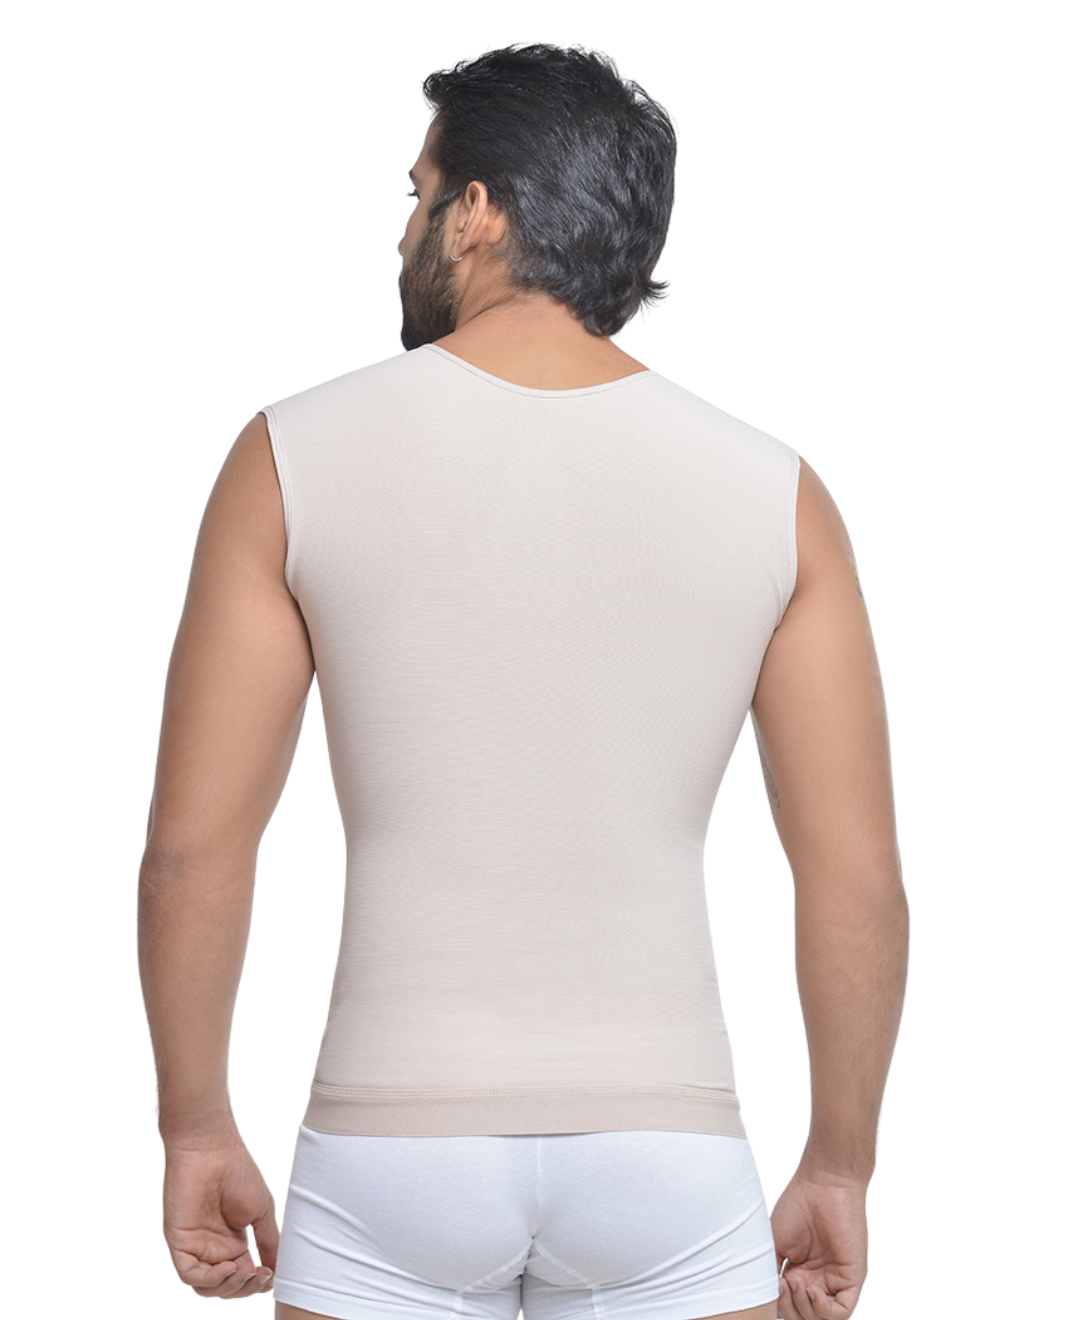 Girdle vest for man - Ref: 014 